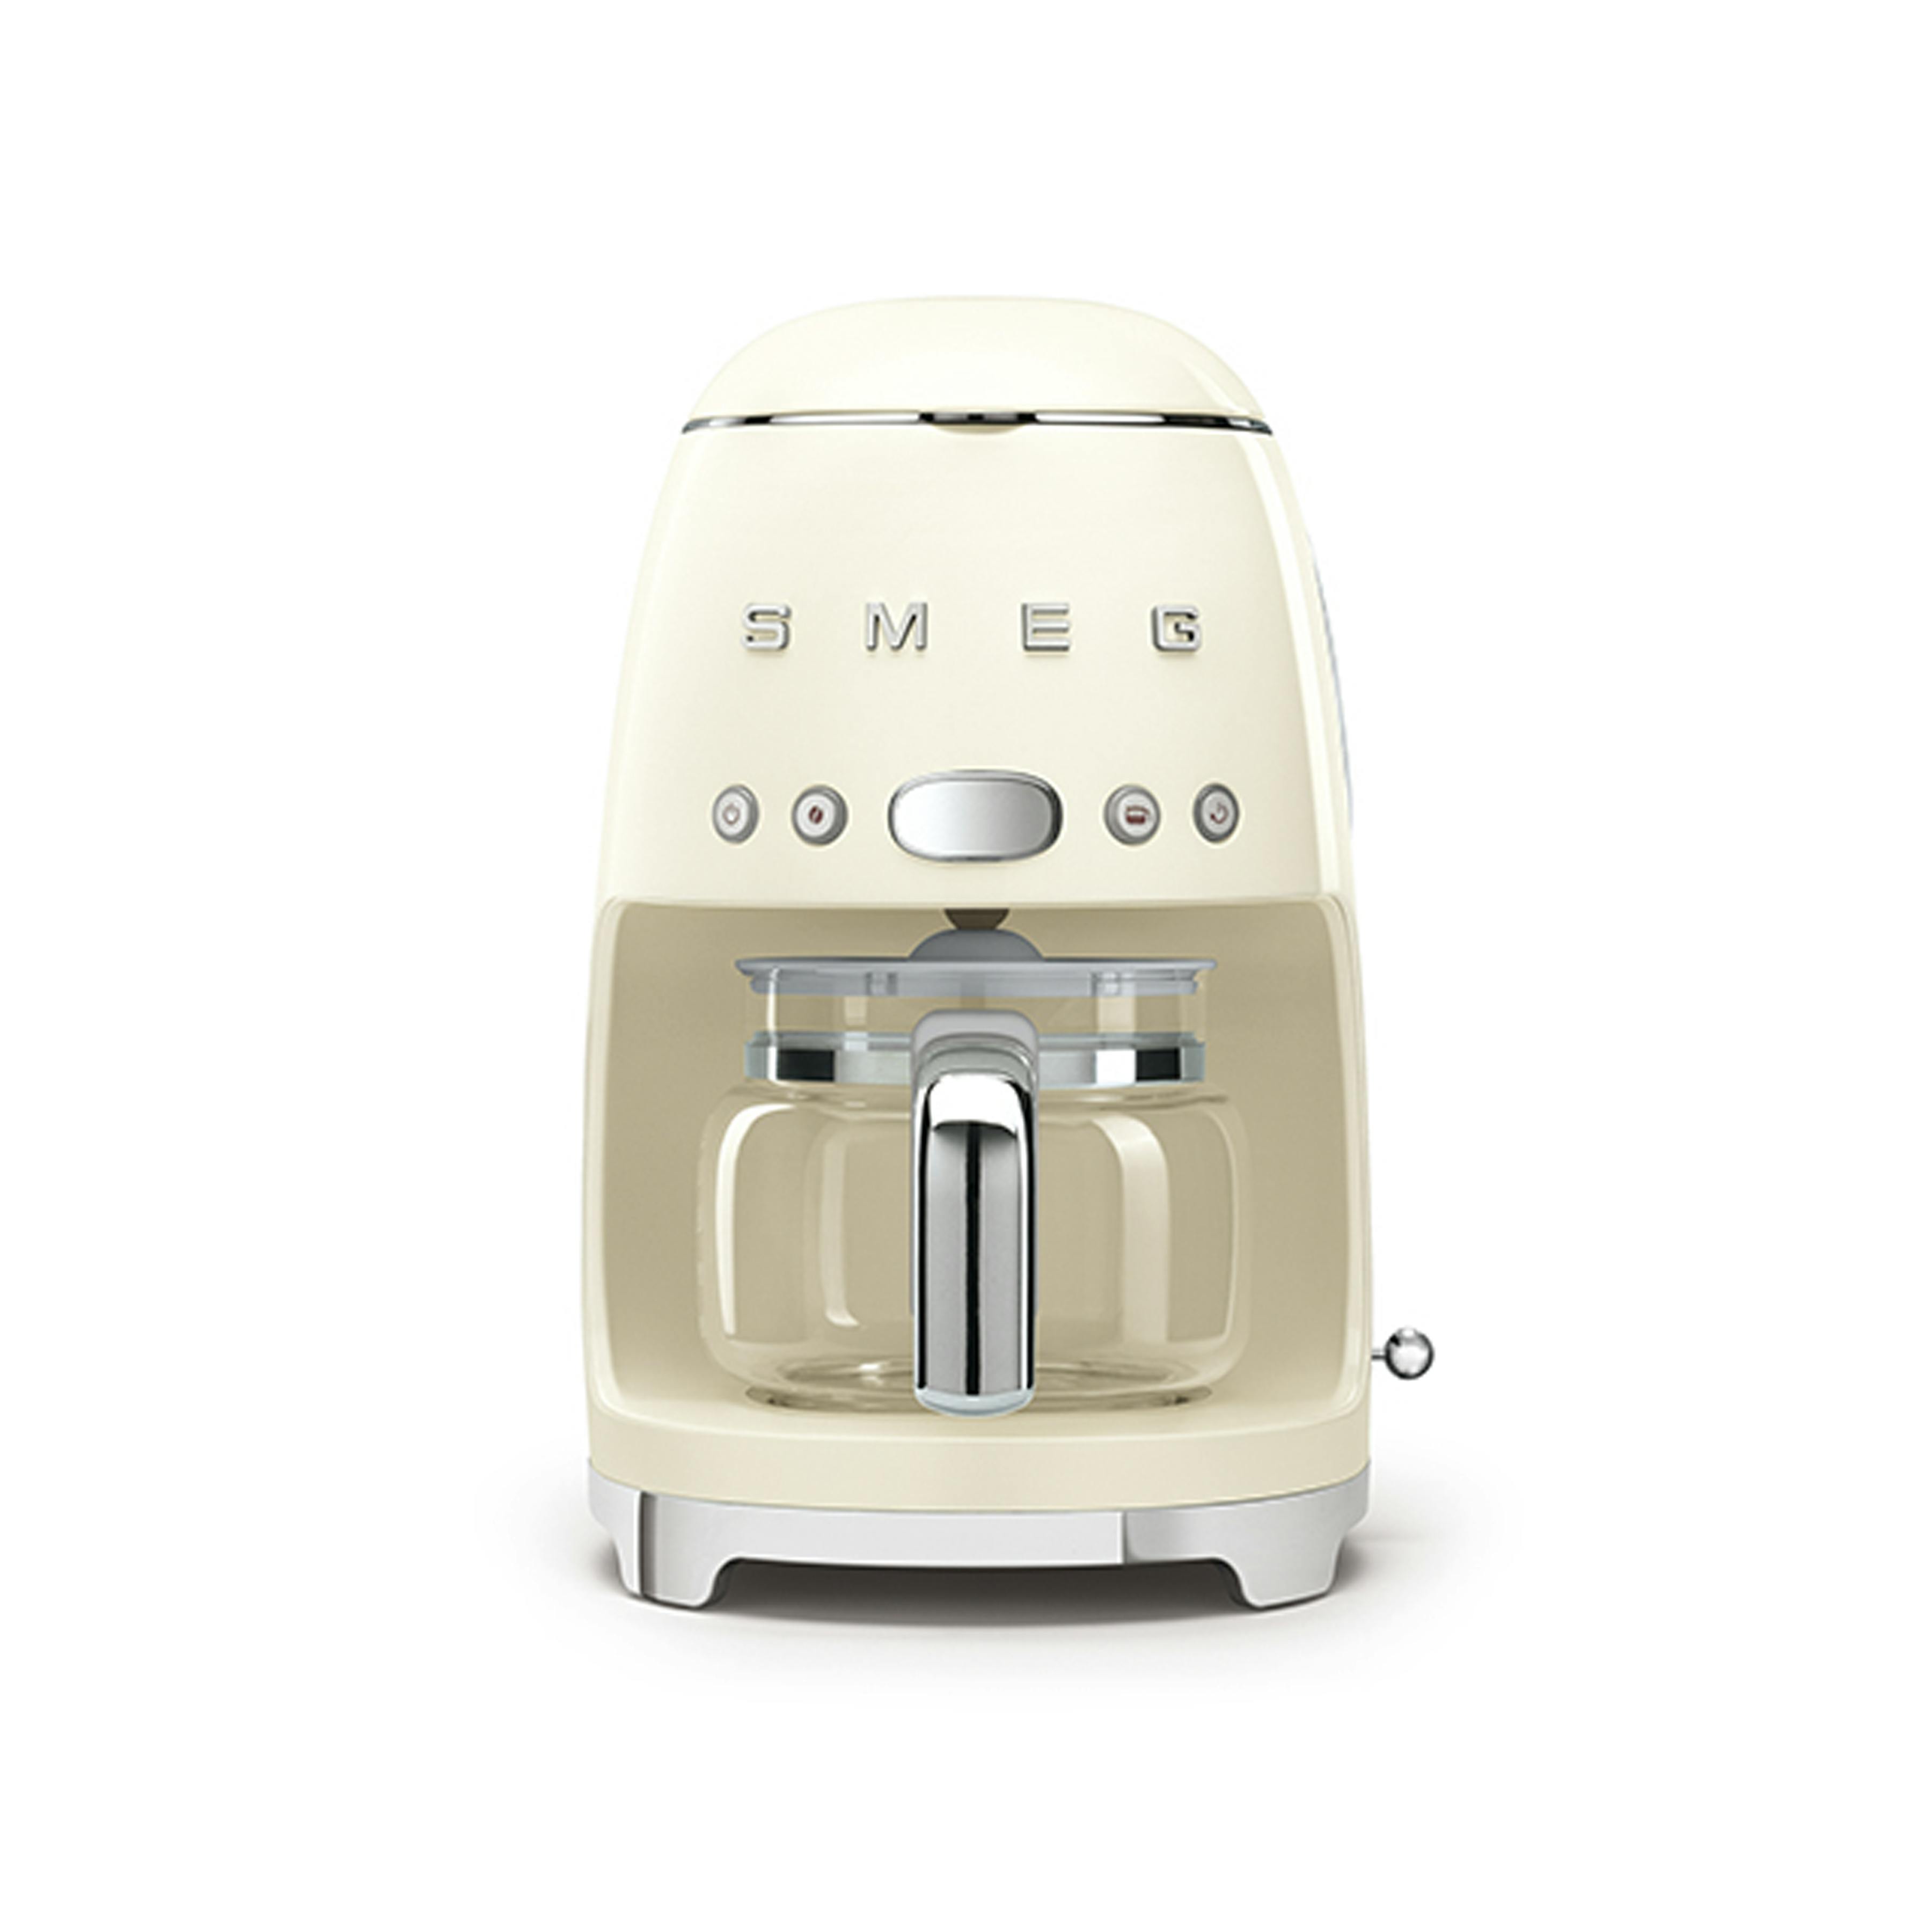 SMEG Beige Retro-Style Drip Coffee Maker, 1.2 L SMEG